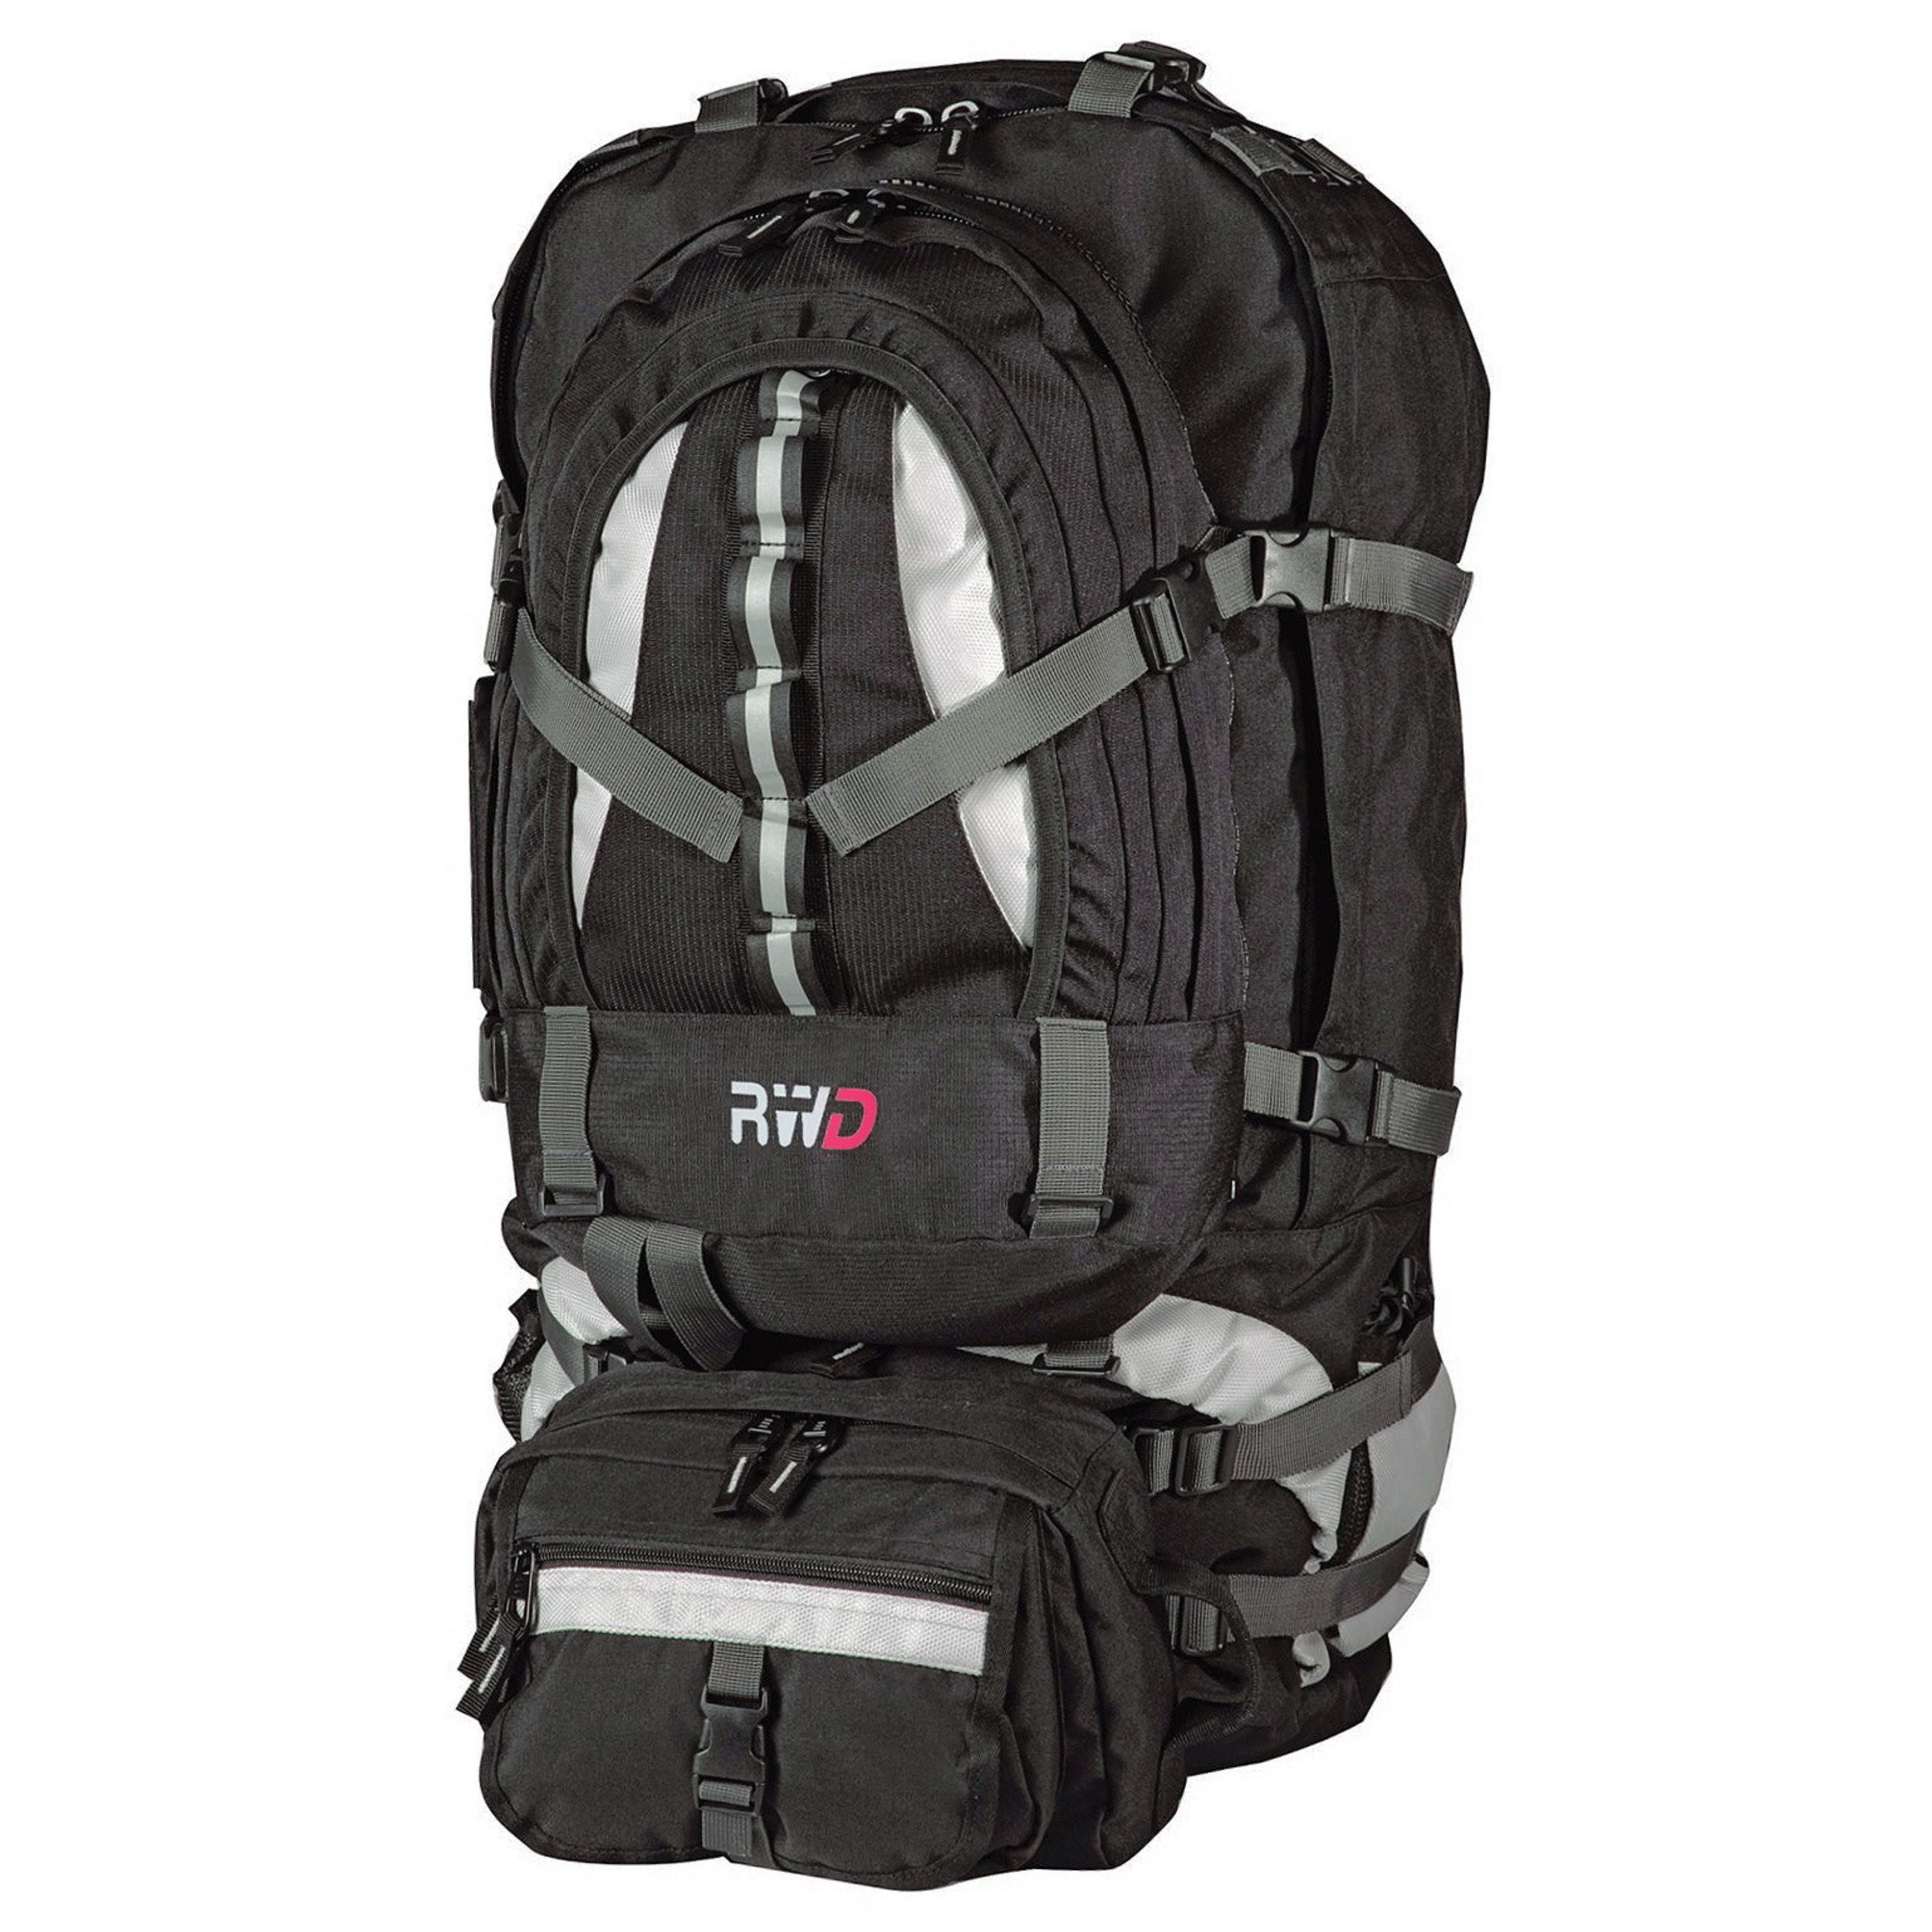 “Boulder” travel backpack and Fanny Pack